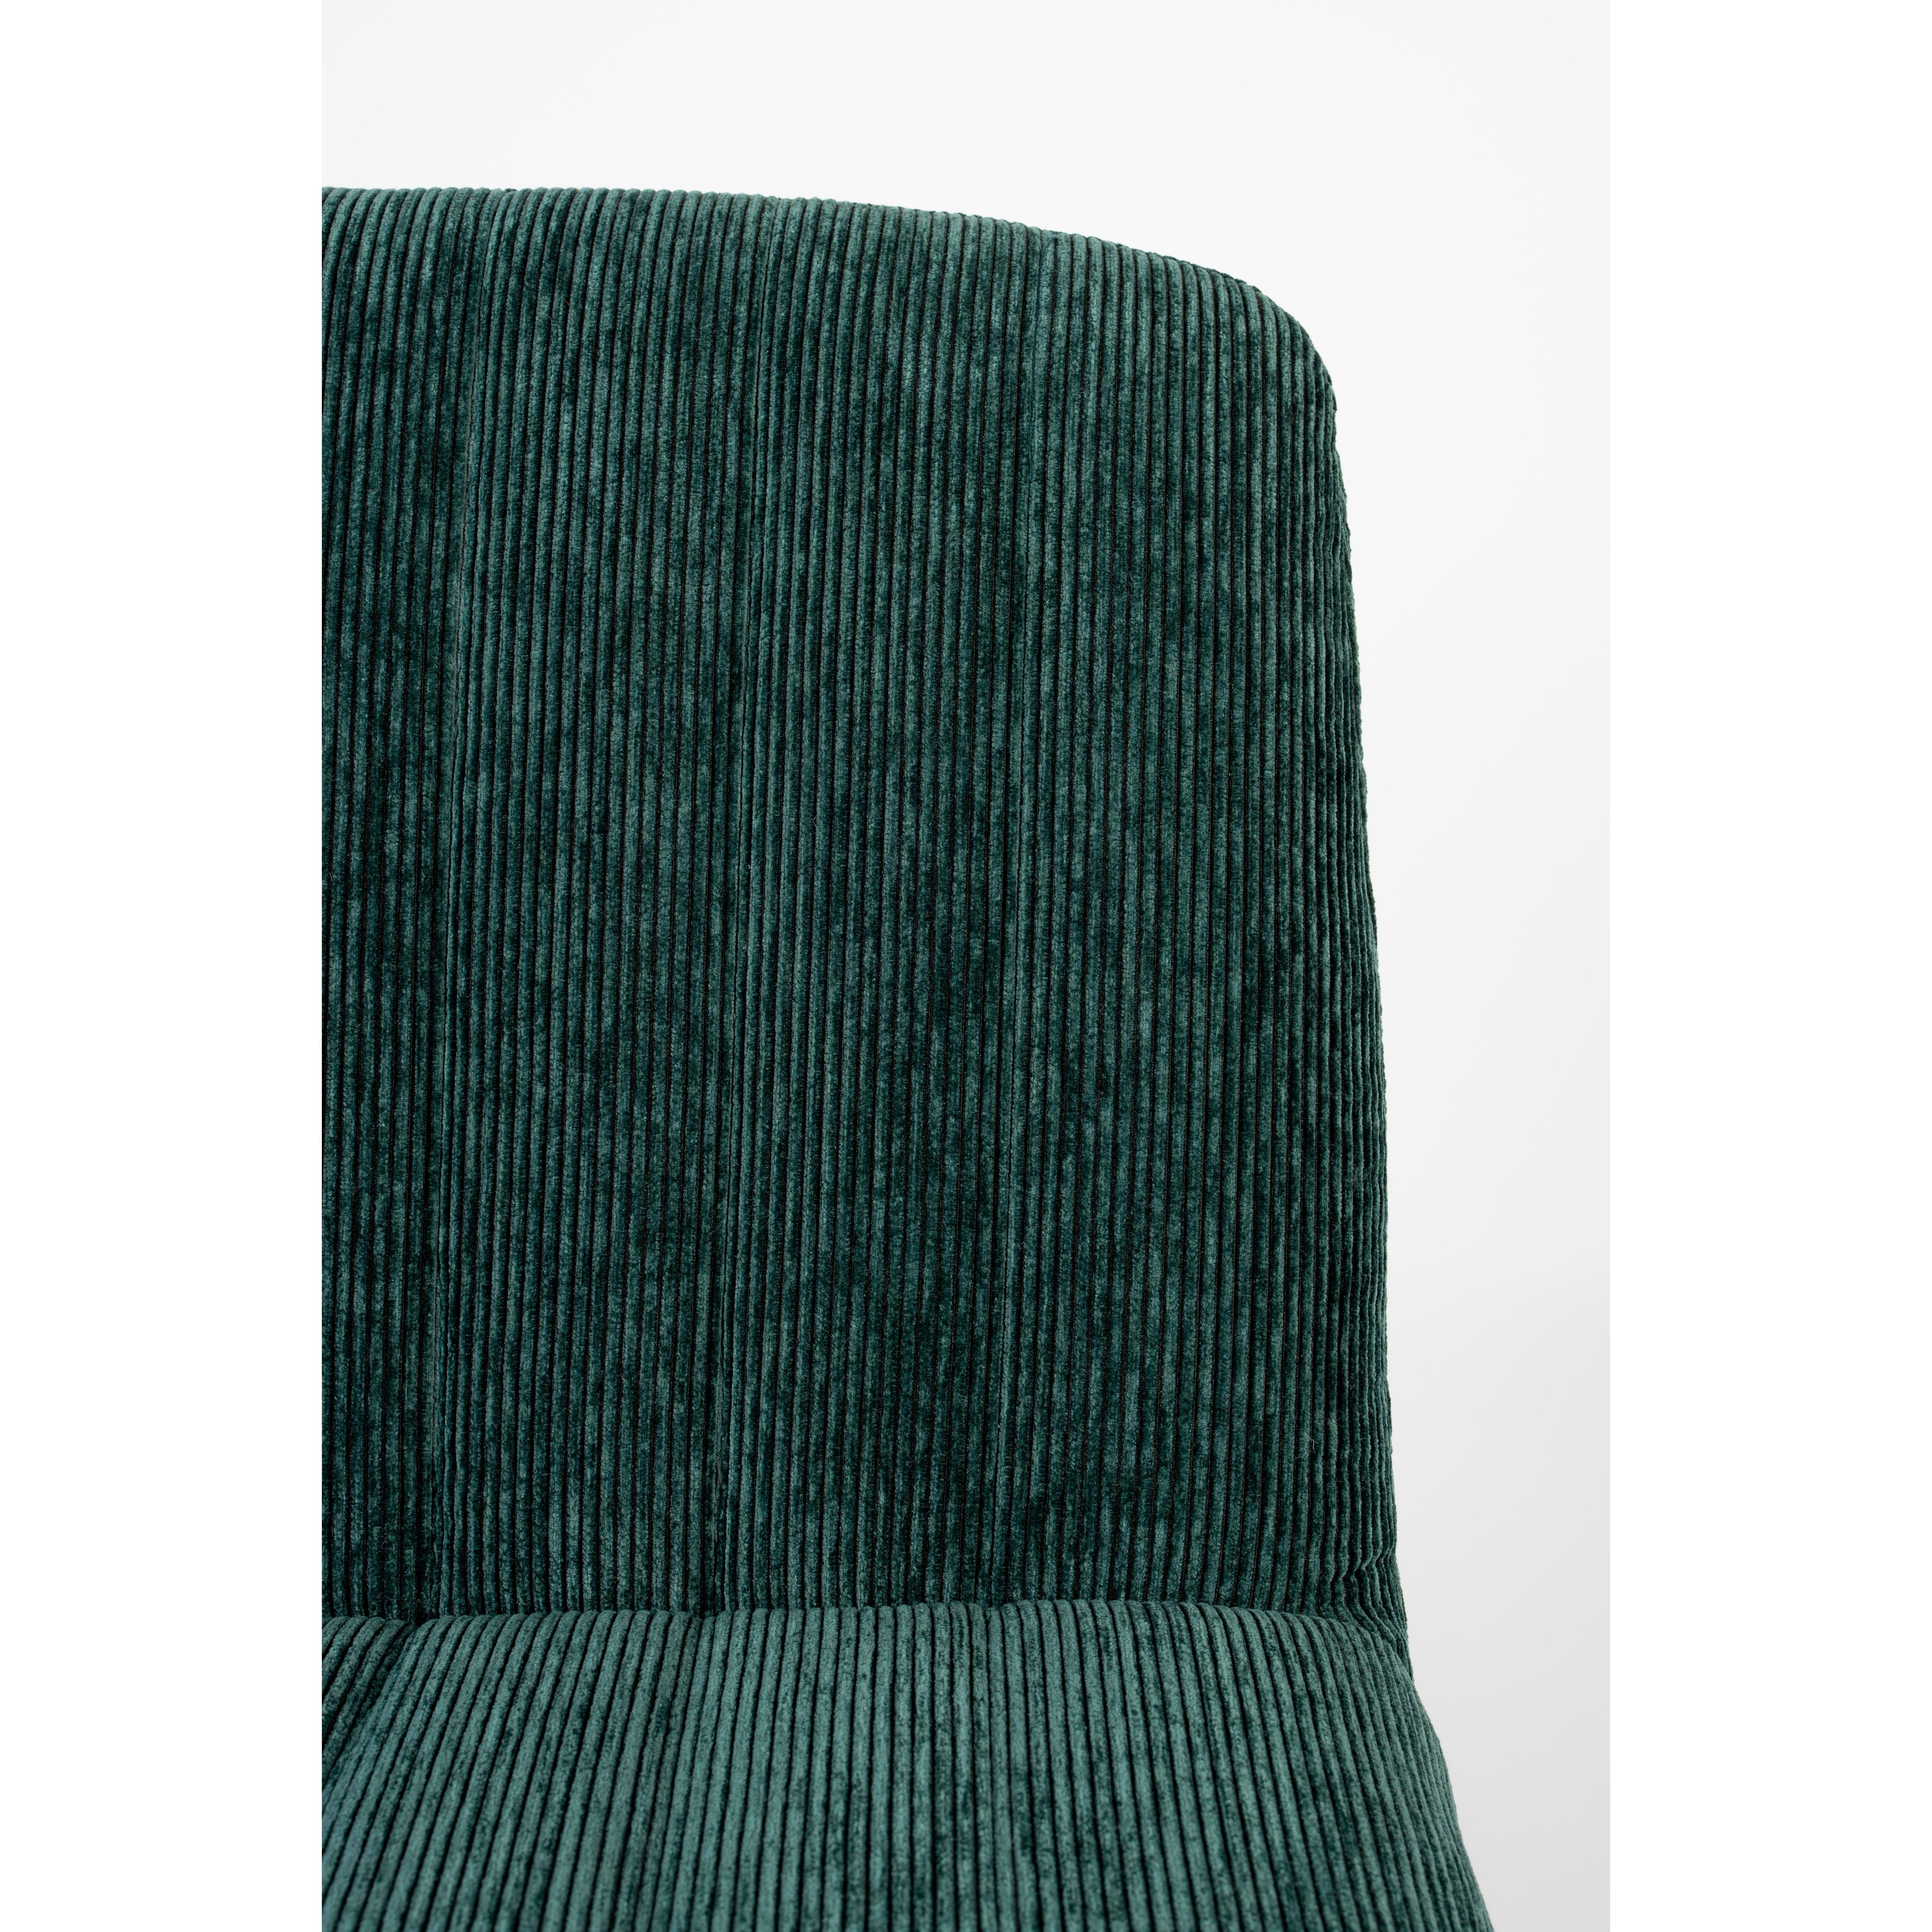 Belmond rib green armchair